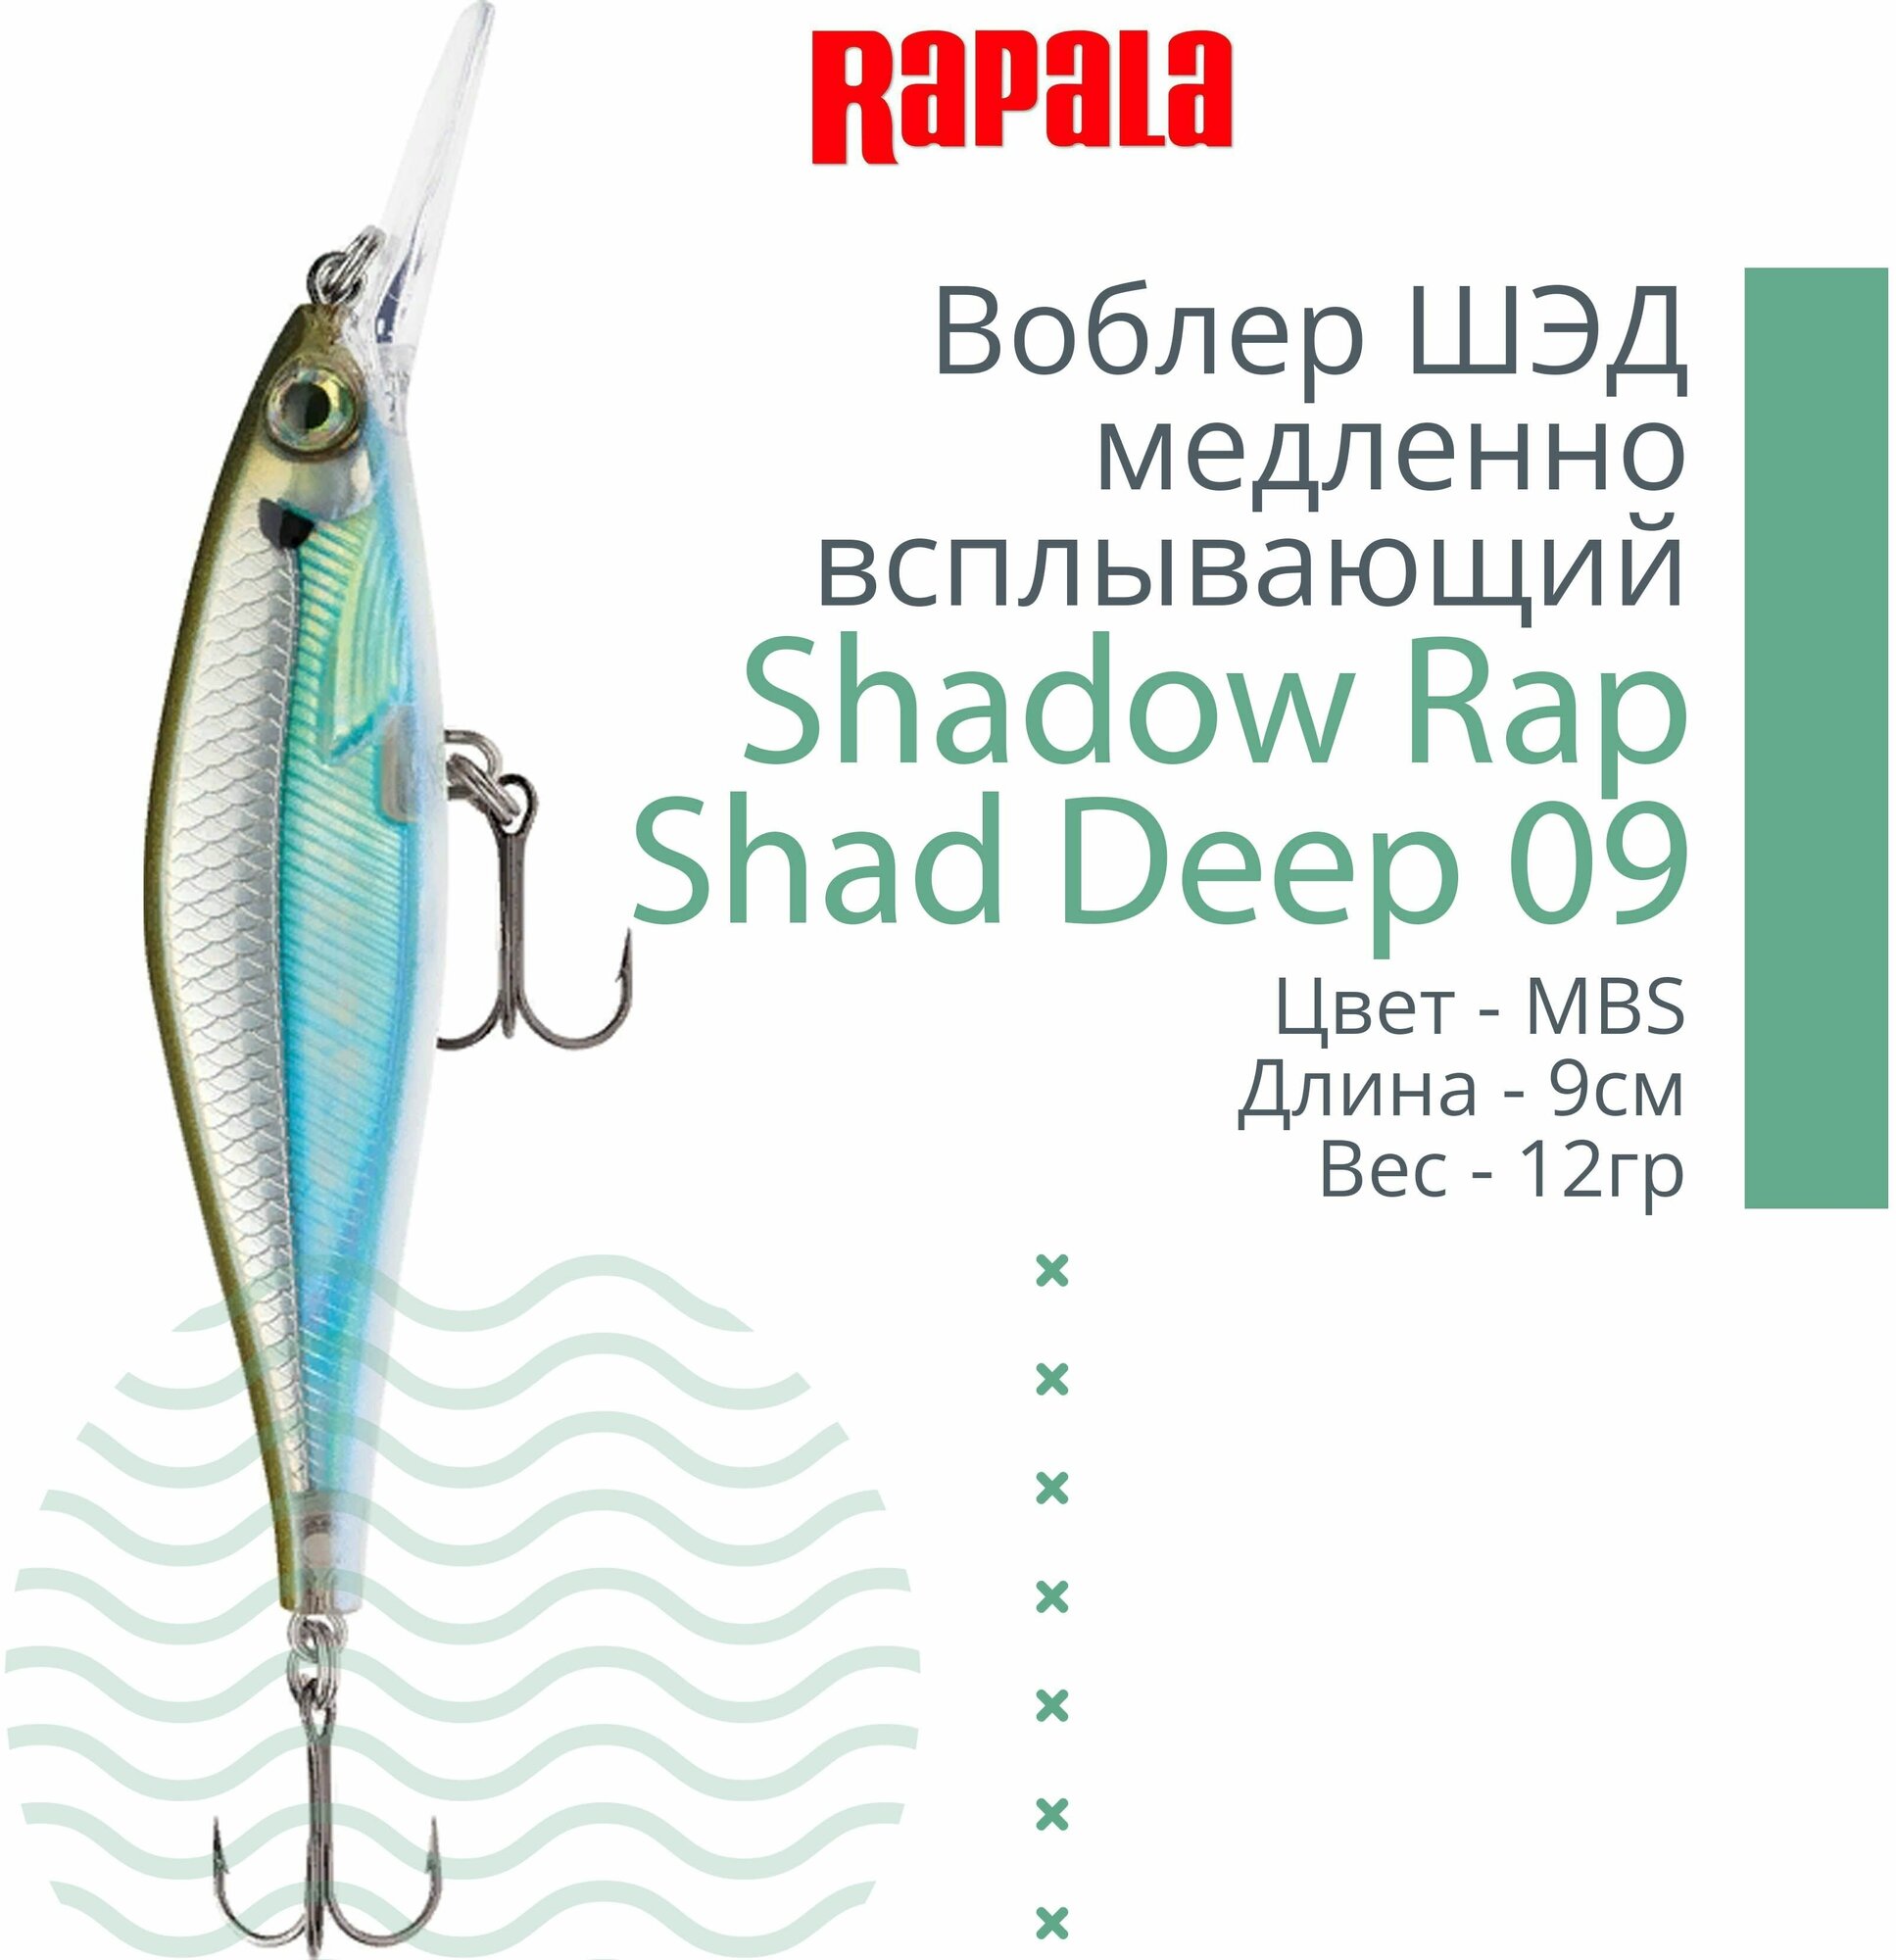 Воблер для рыбалки RAPALA Shadow Rap Shad Deep 09, 9см, 12гр, цвет MBS, медленно всплывающий